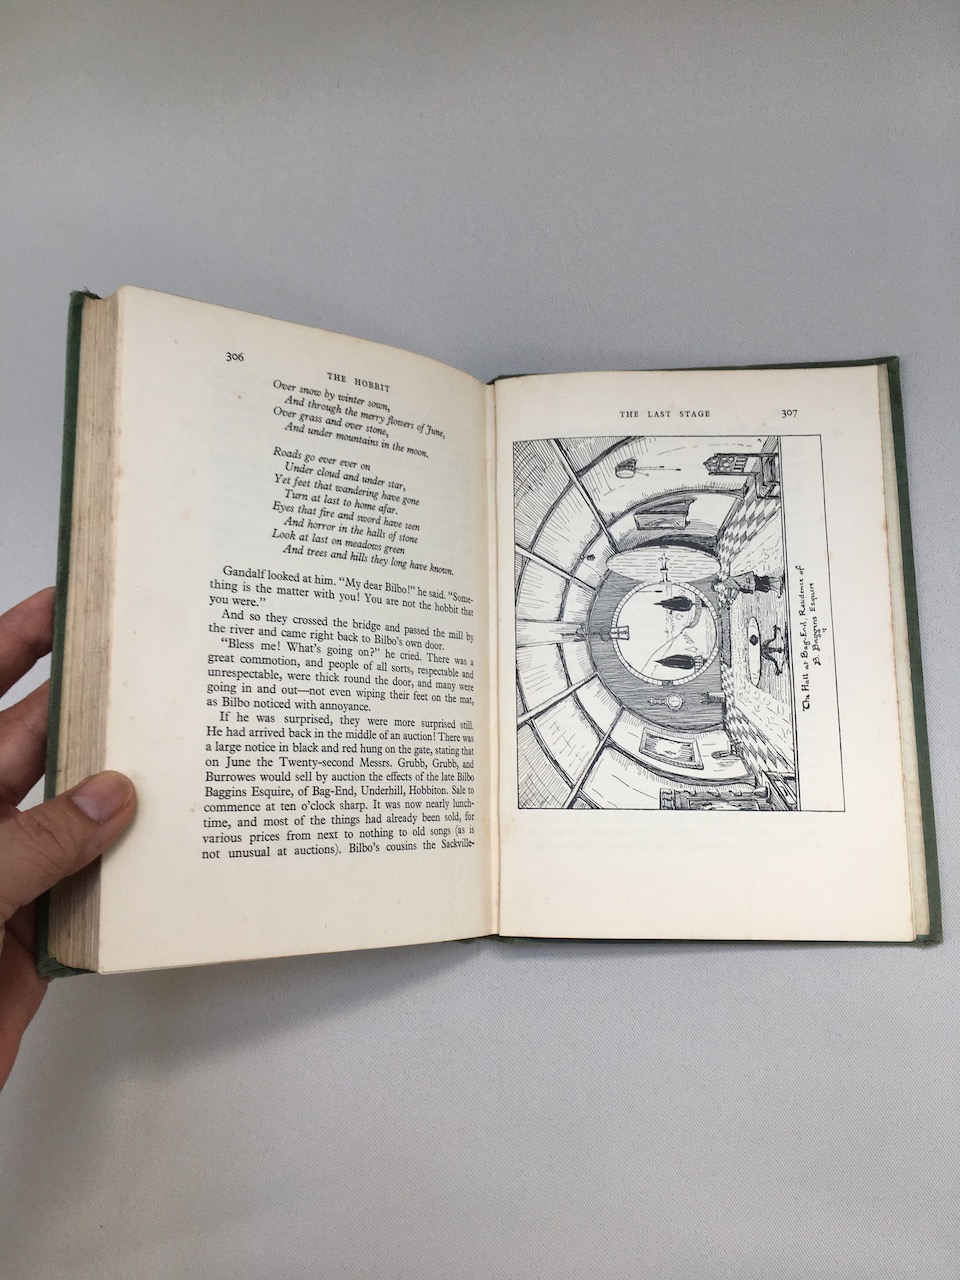 
The Hobbit, George Allen & Unwin, 1937 1st UK Edition 2nd impression 26